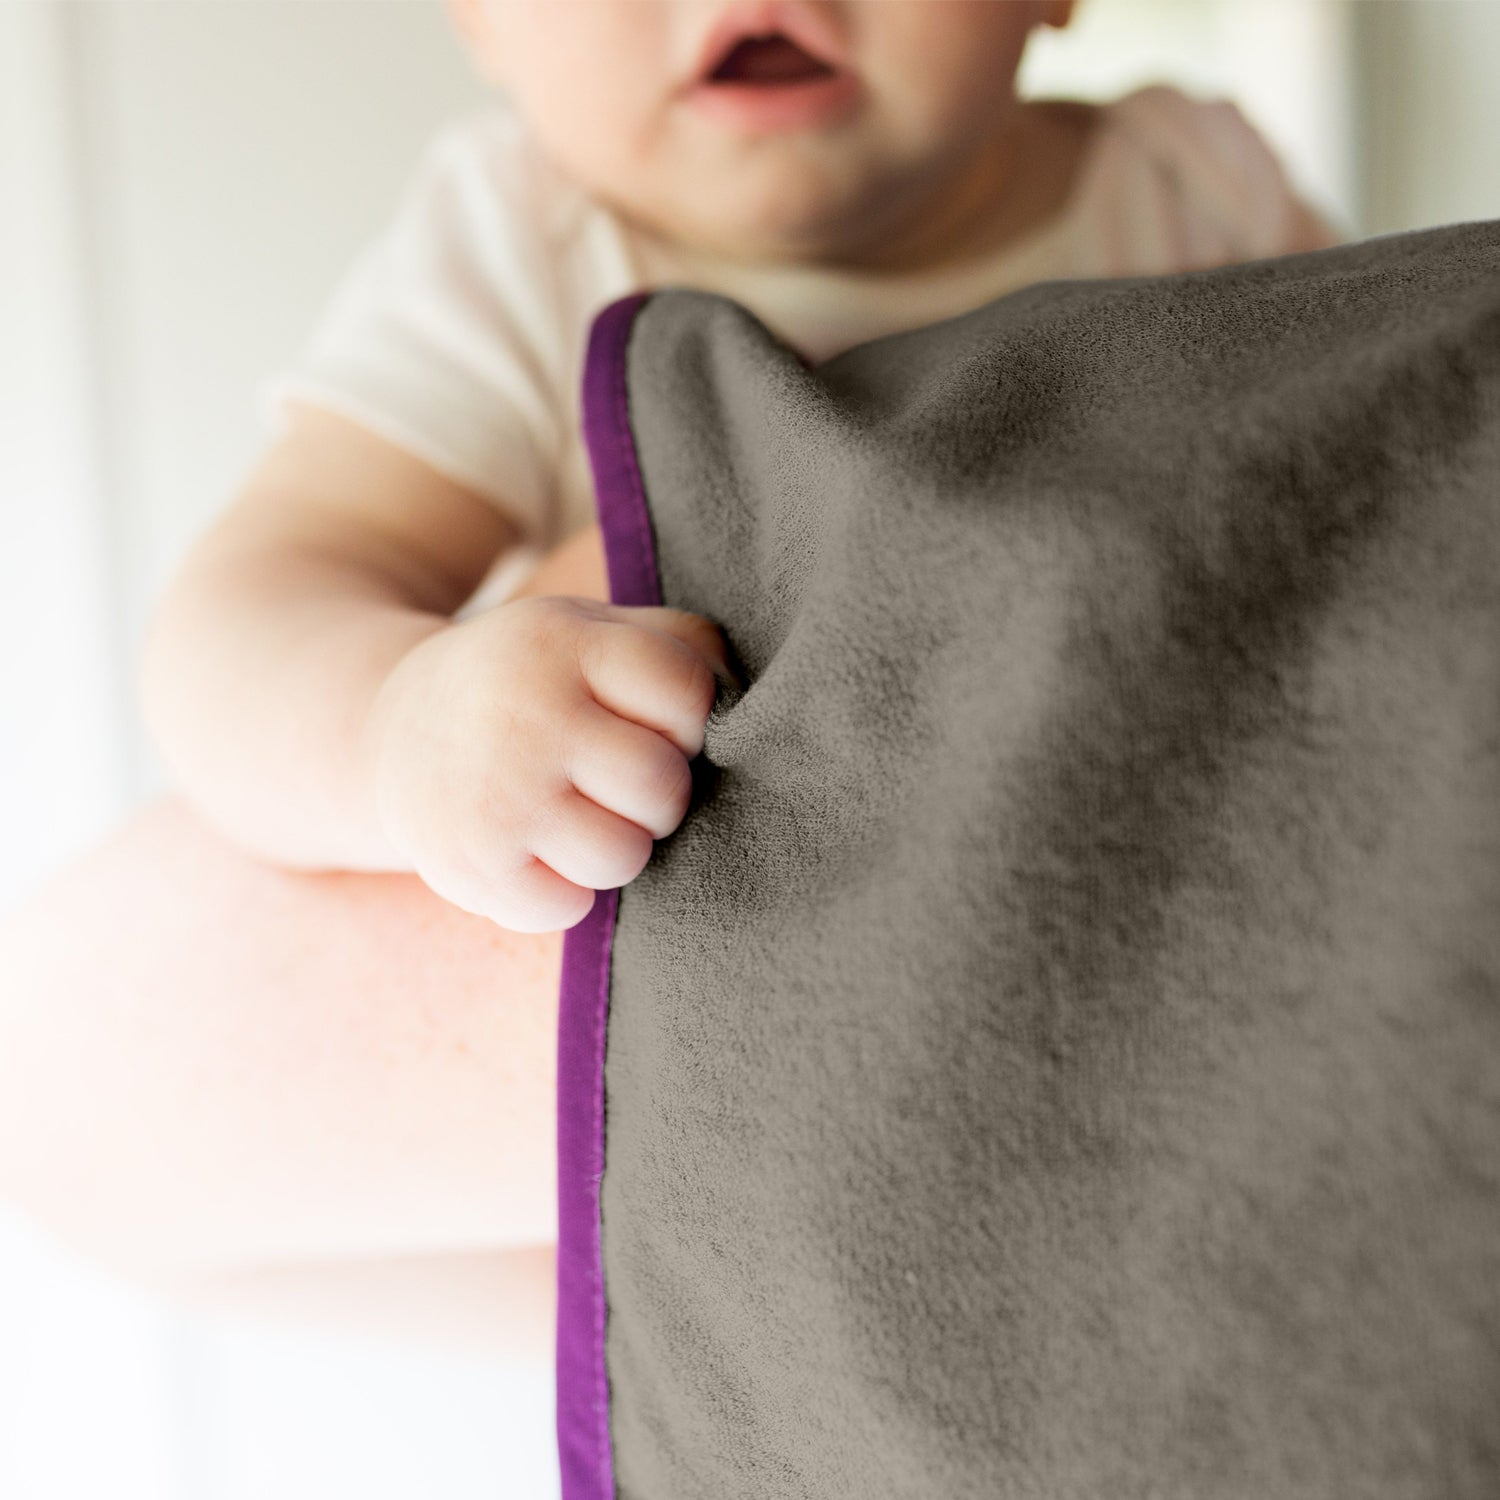 Baby Burp Cloths, Fleece Waterproof Multi-Use Pads